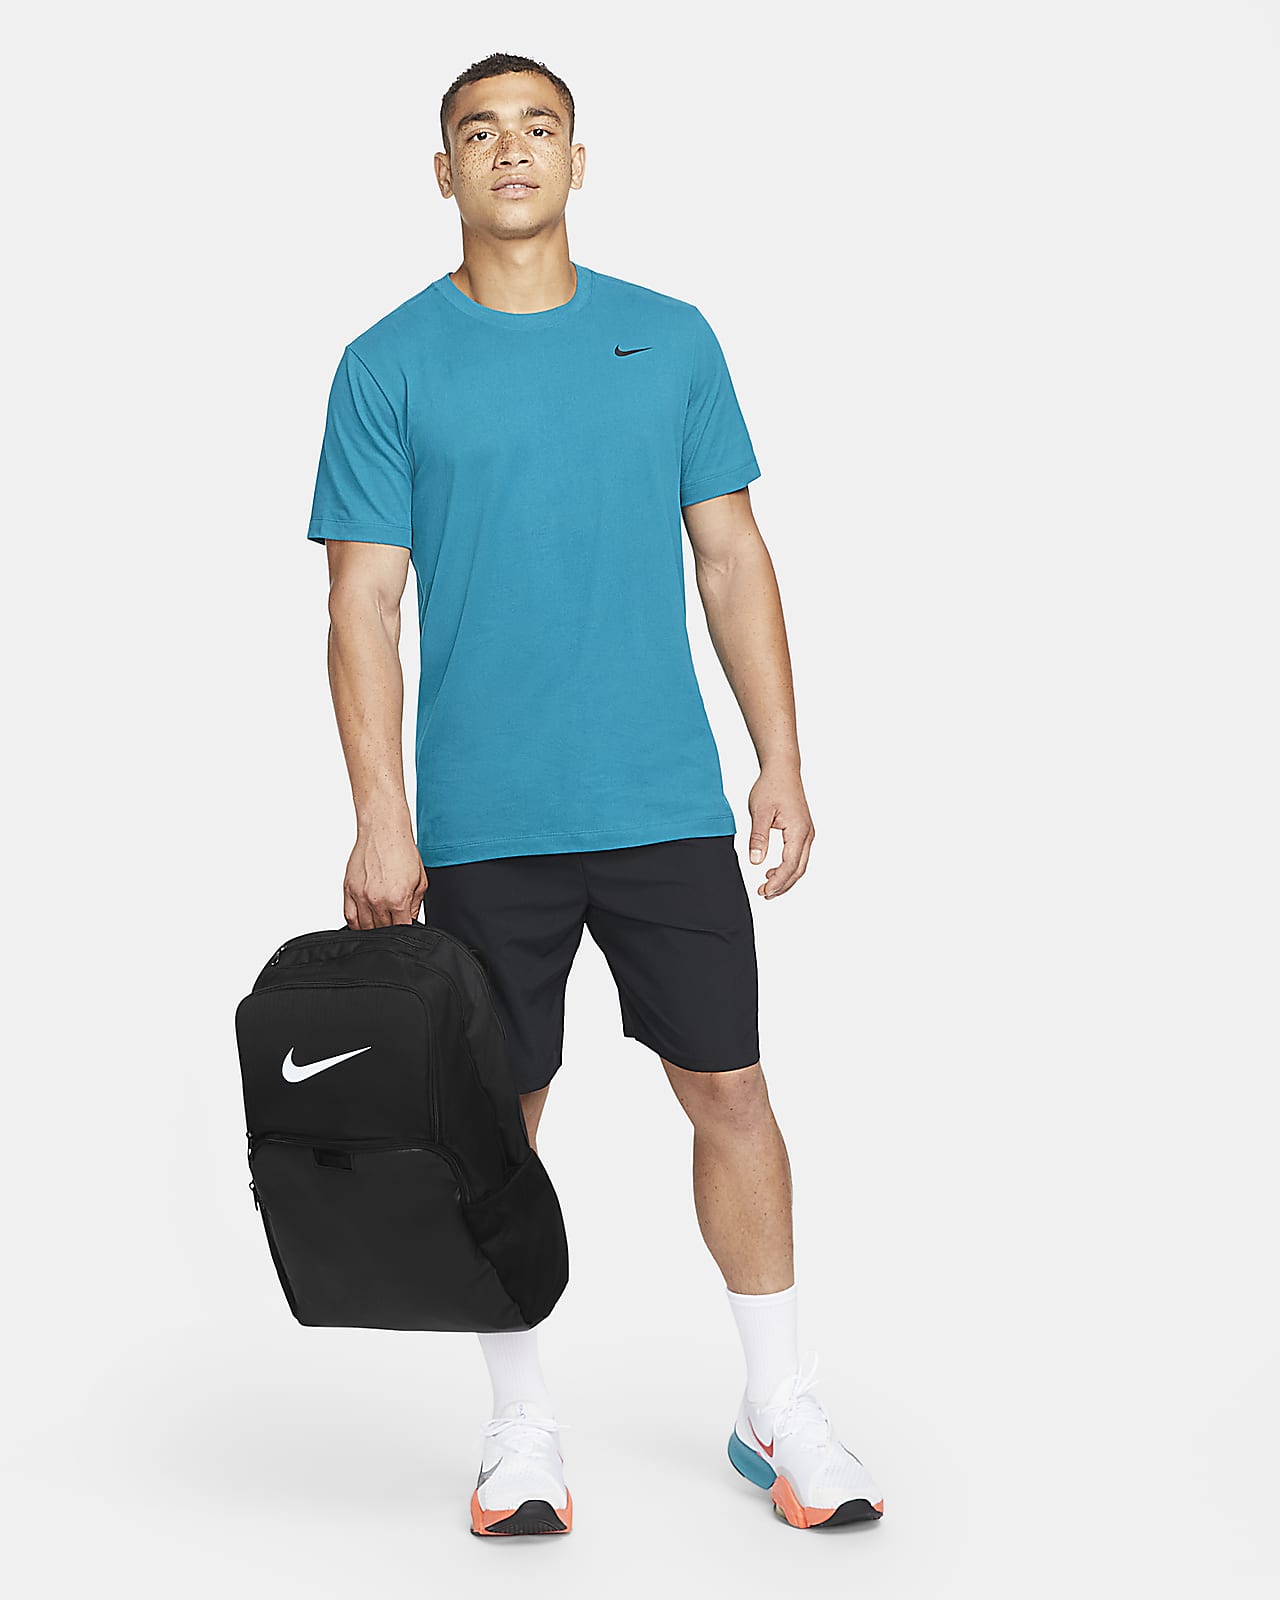 Mochila deporte Nike Brasilia 9,5 mediana de 24L negro